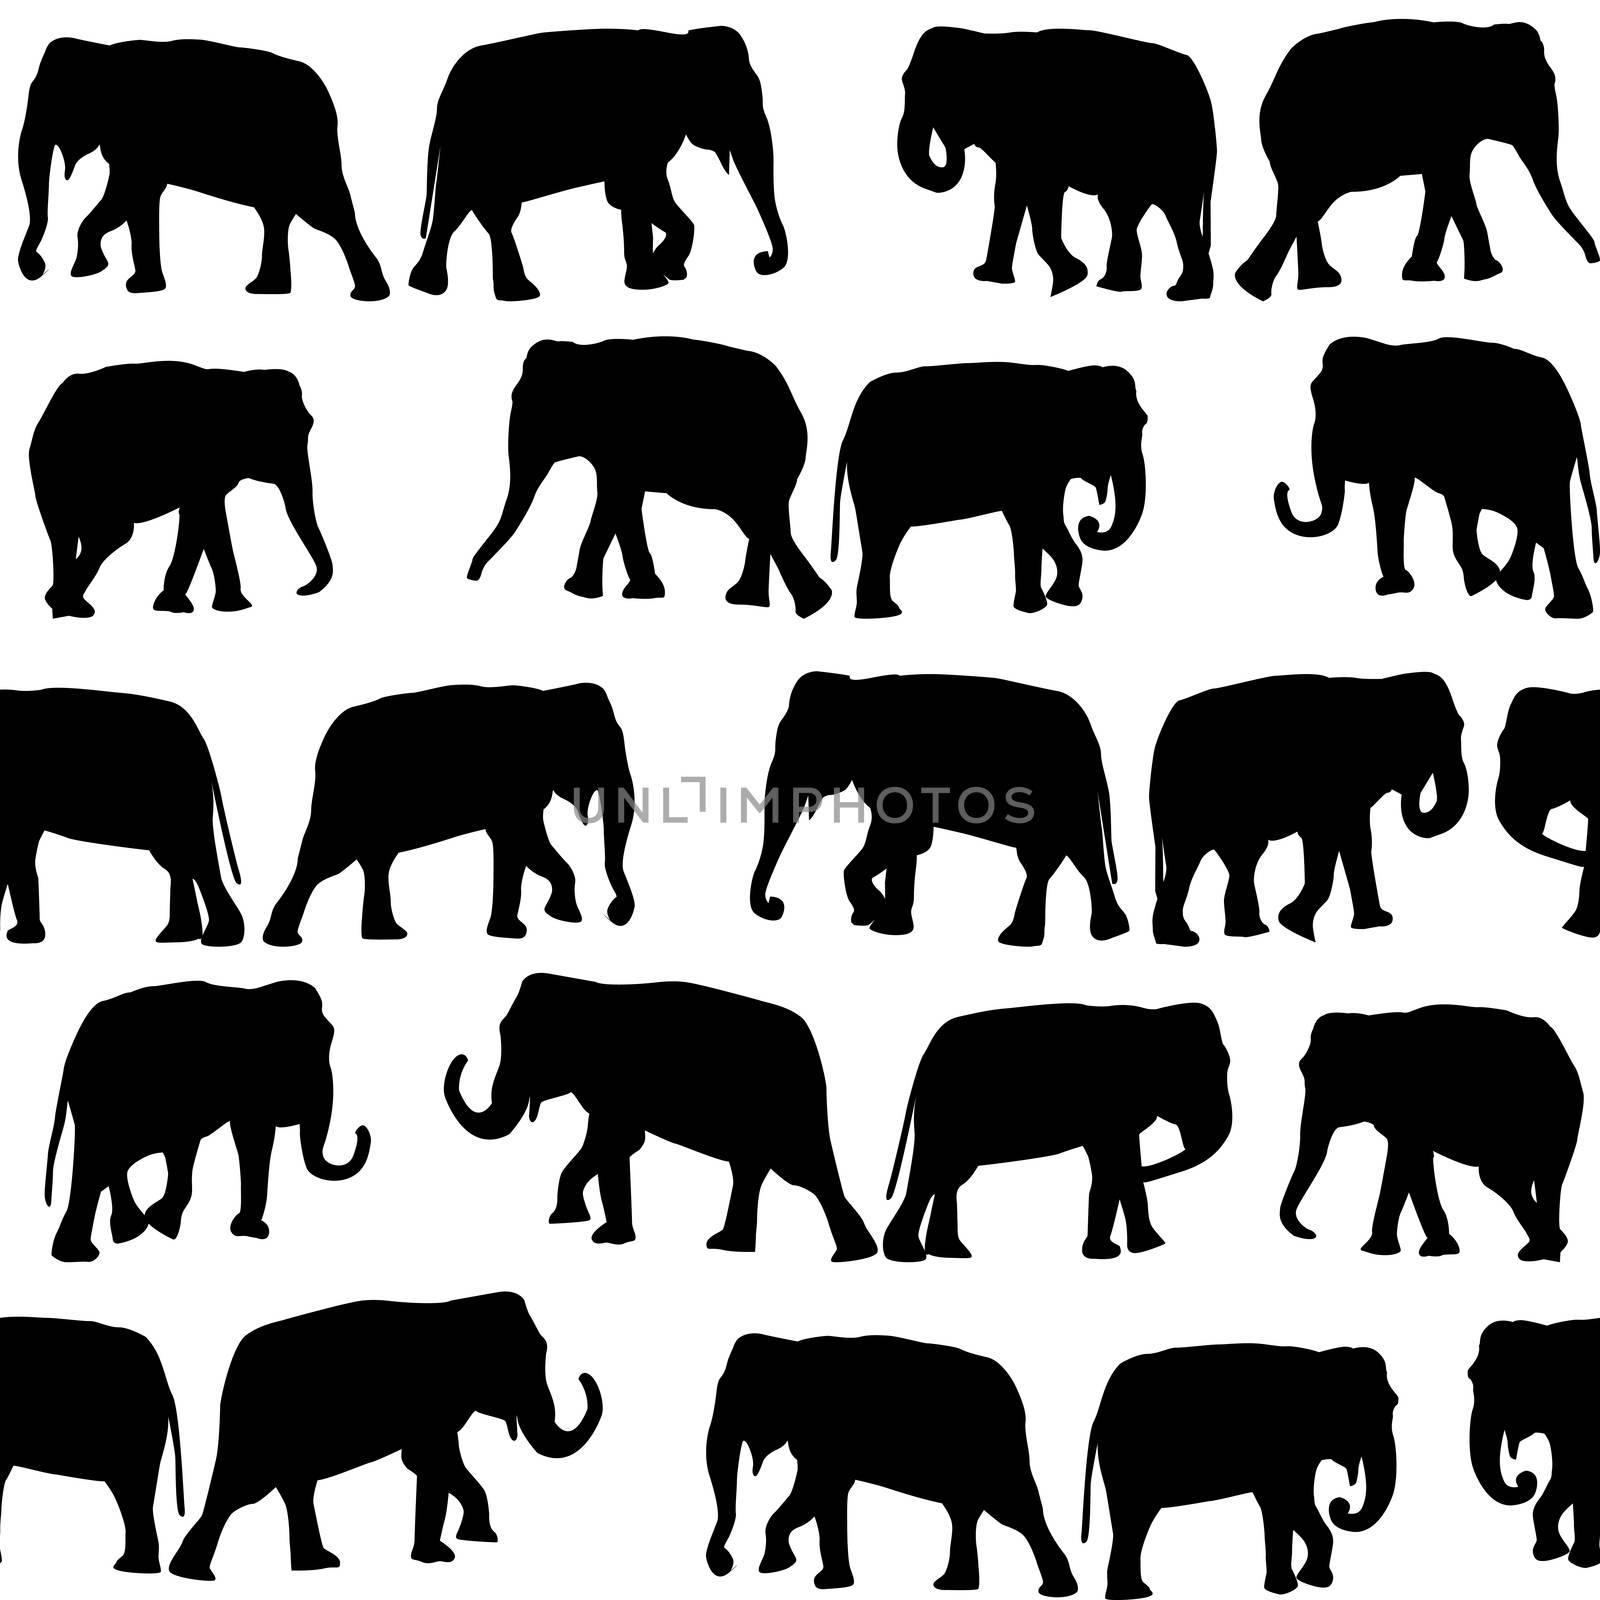 Black elephants seamless pattern by hibrida13